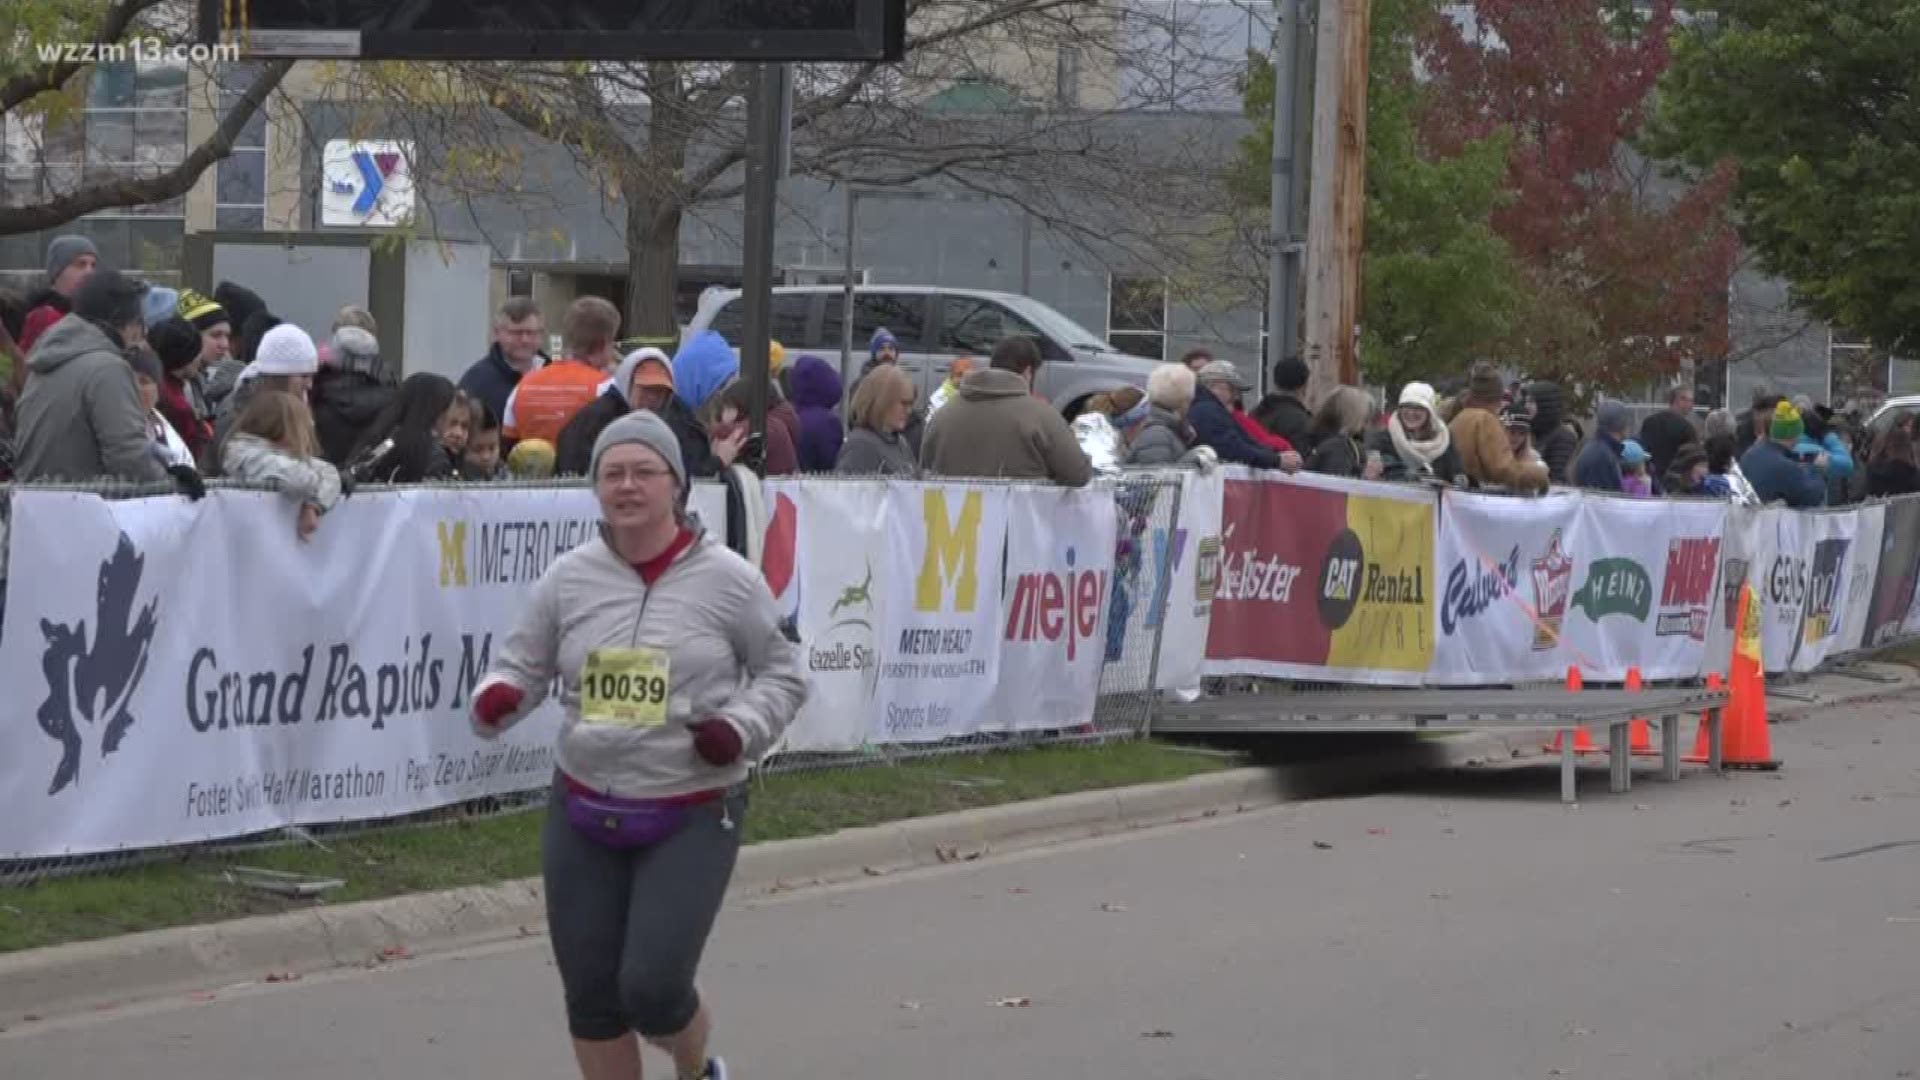 Runners gather for Grand Rapids marathon